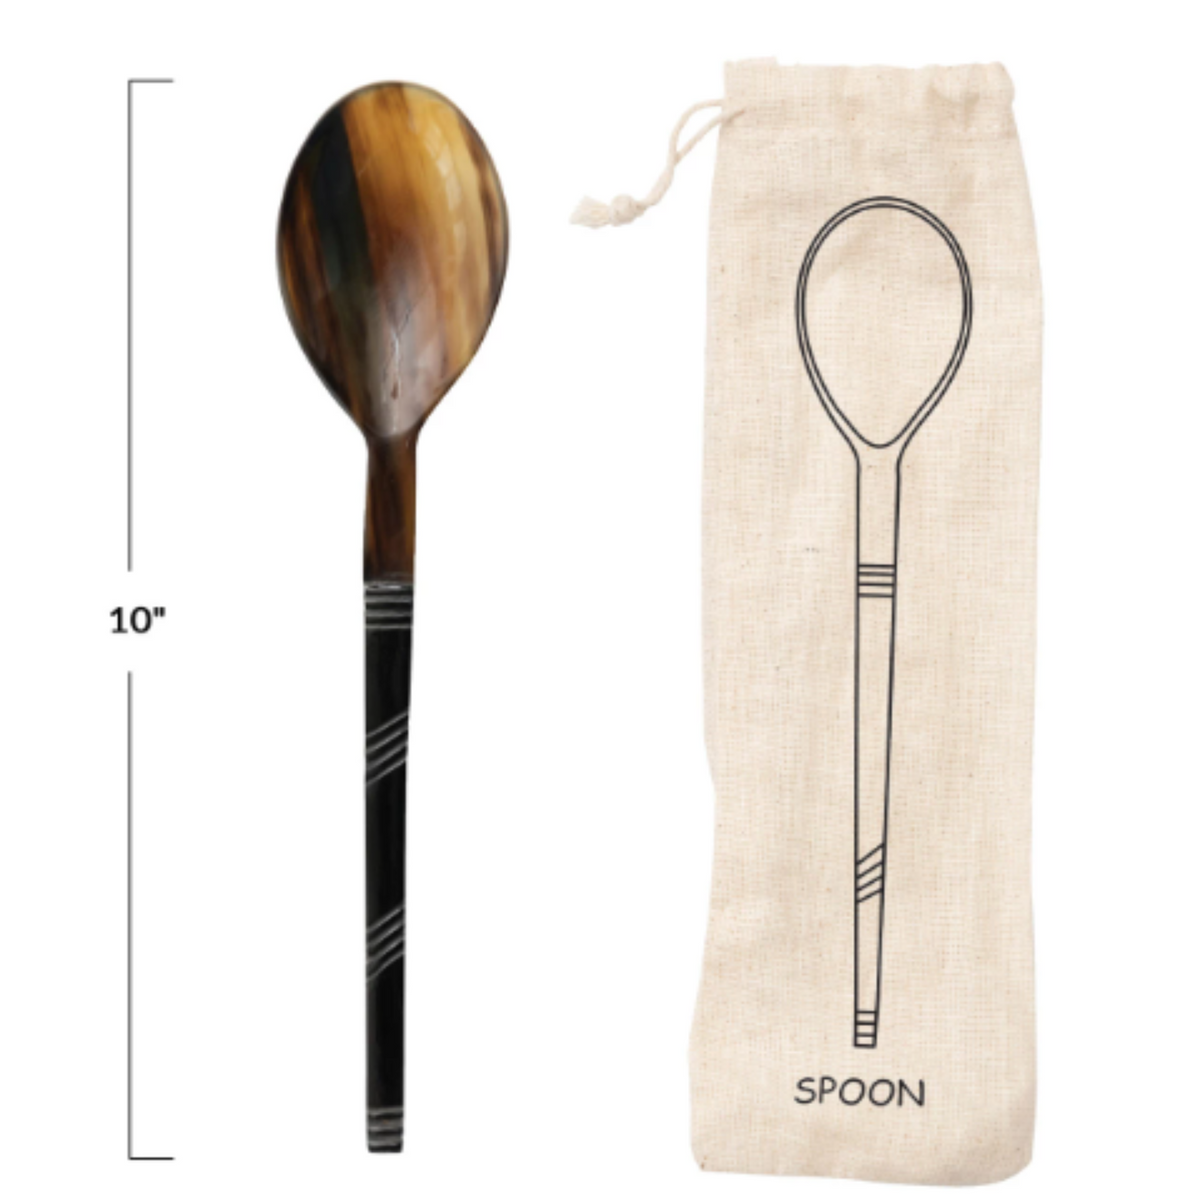 Horn Serving Spoon In Printed Drawstring Bag